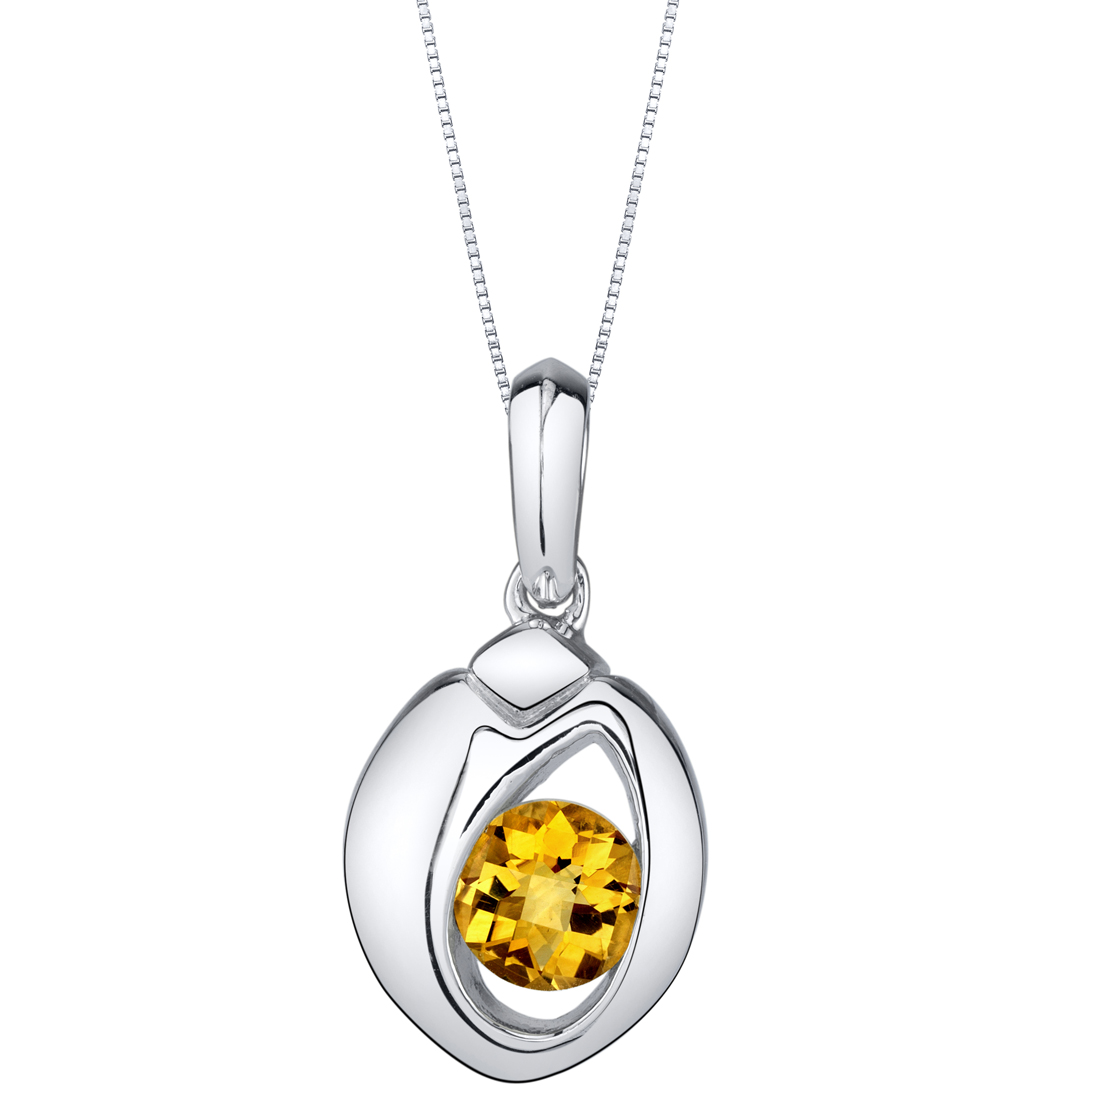 Citrine Sterling Silver Sphere Pendant Necklace 0.75 Carats | eBay